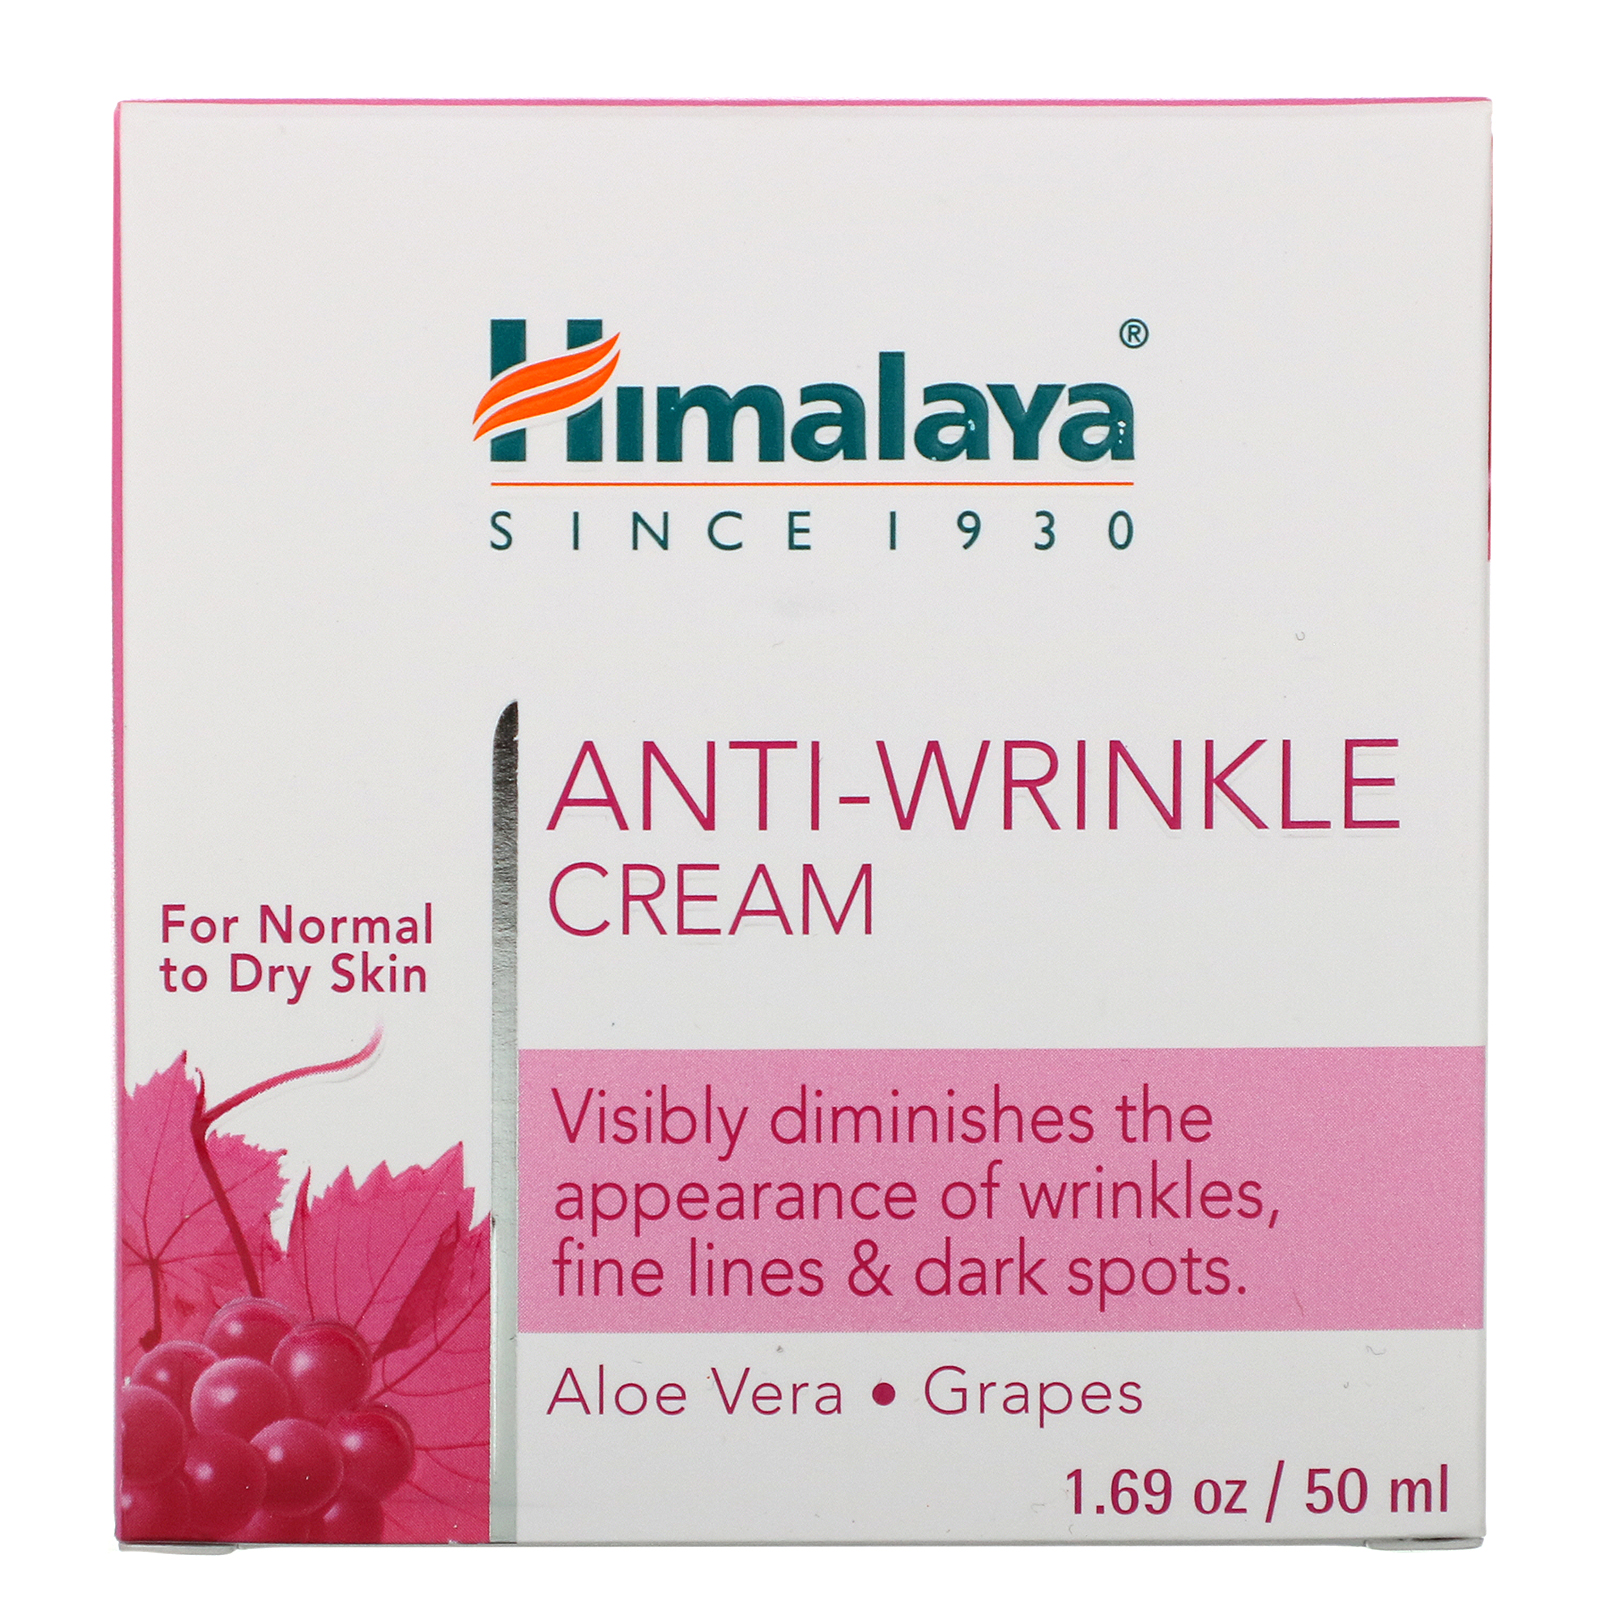 himalaya anti wrinkle cream ingredients)